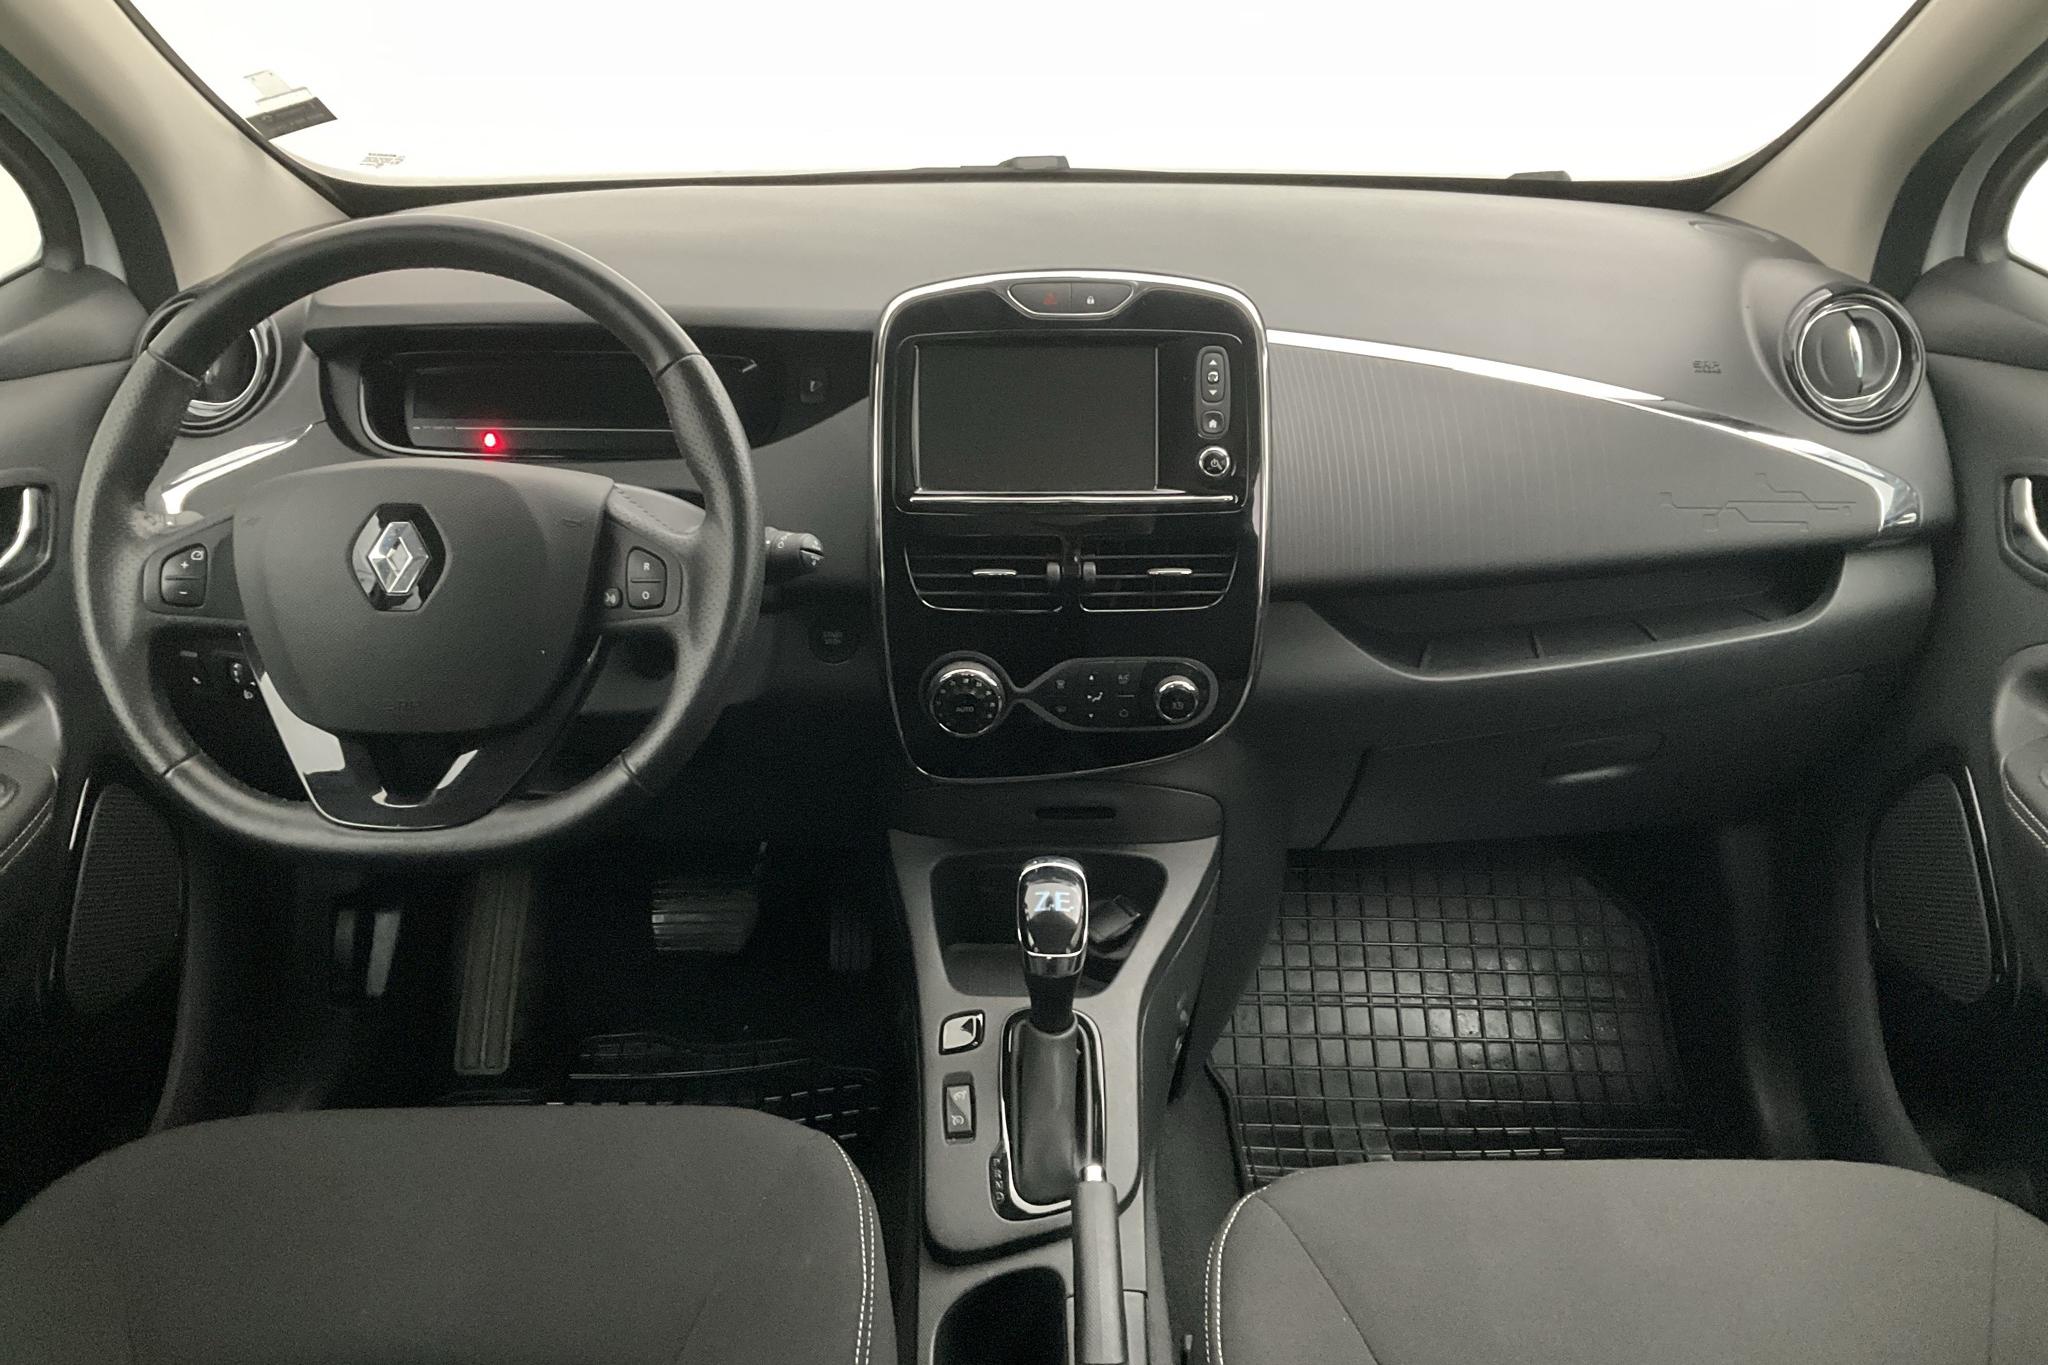 Renault Zoe 41 kWh R110 (108hk) - 48 150 km - Automatic - white - 2019